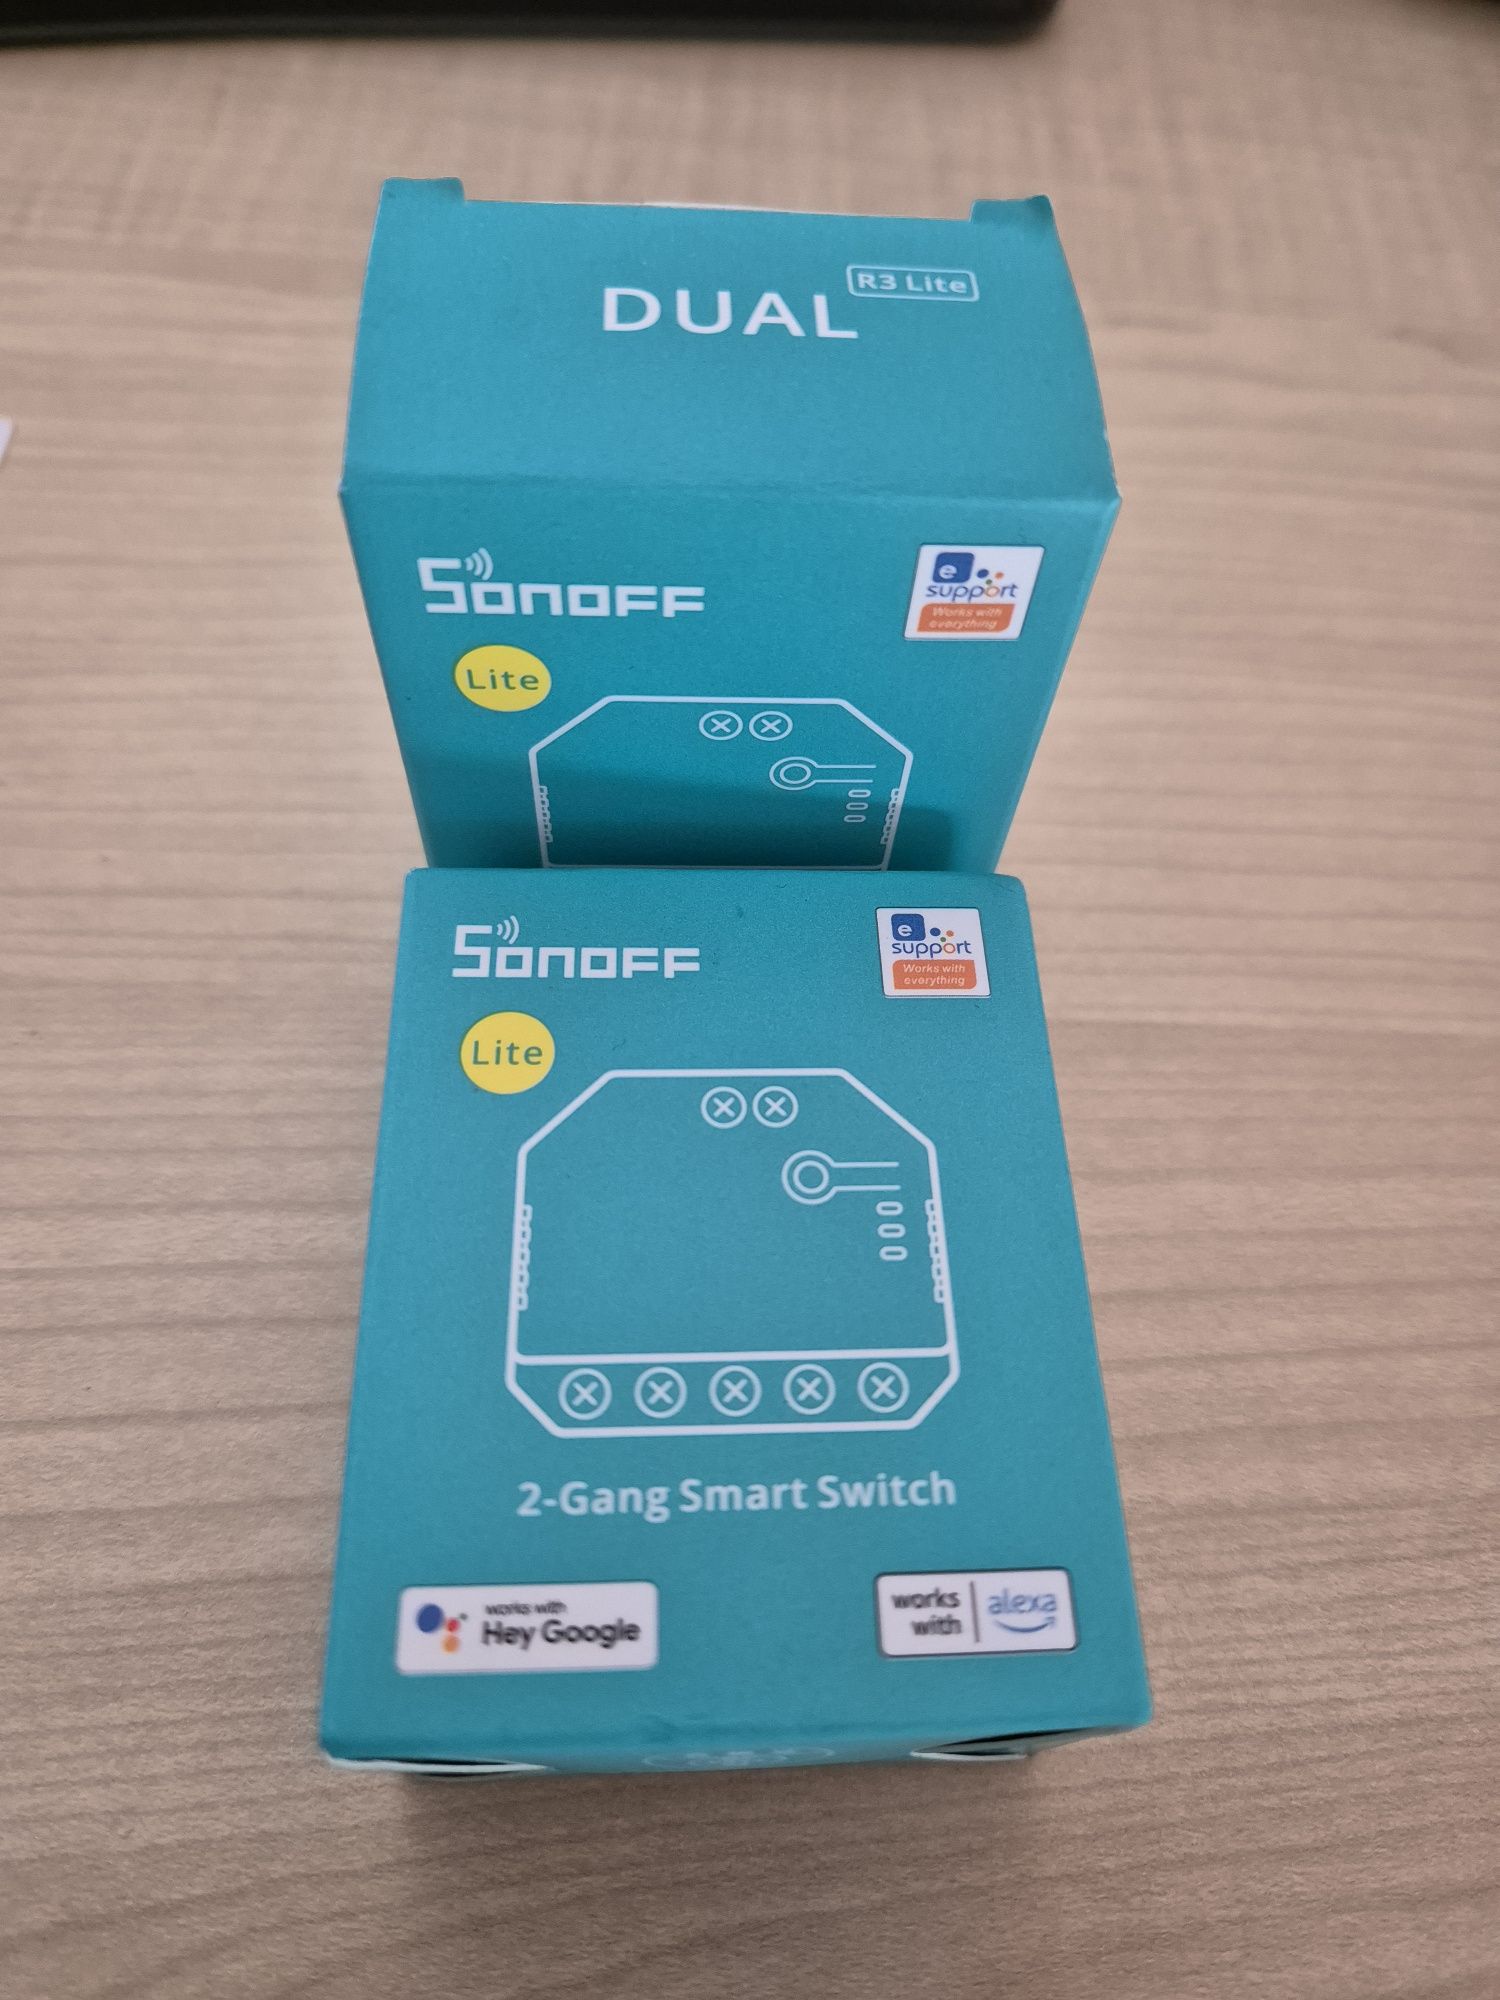 Sonoff dual R3 lite -switch estores eléctricos